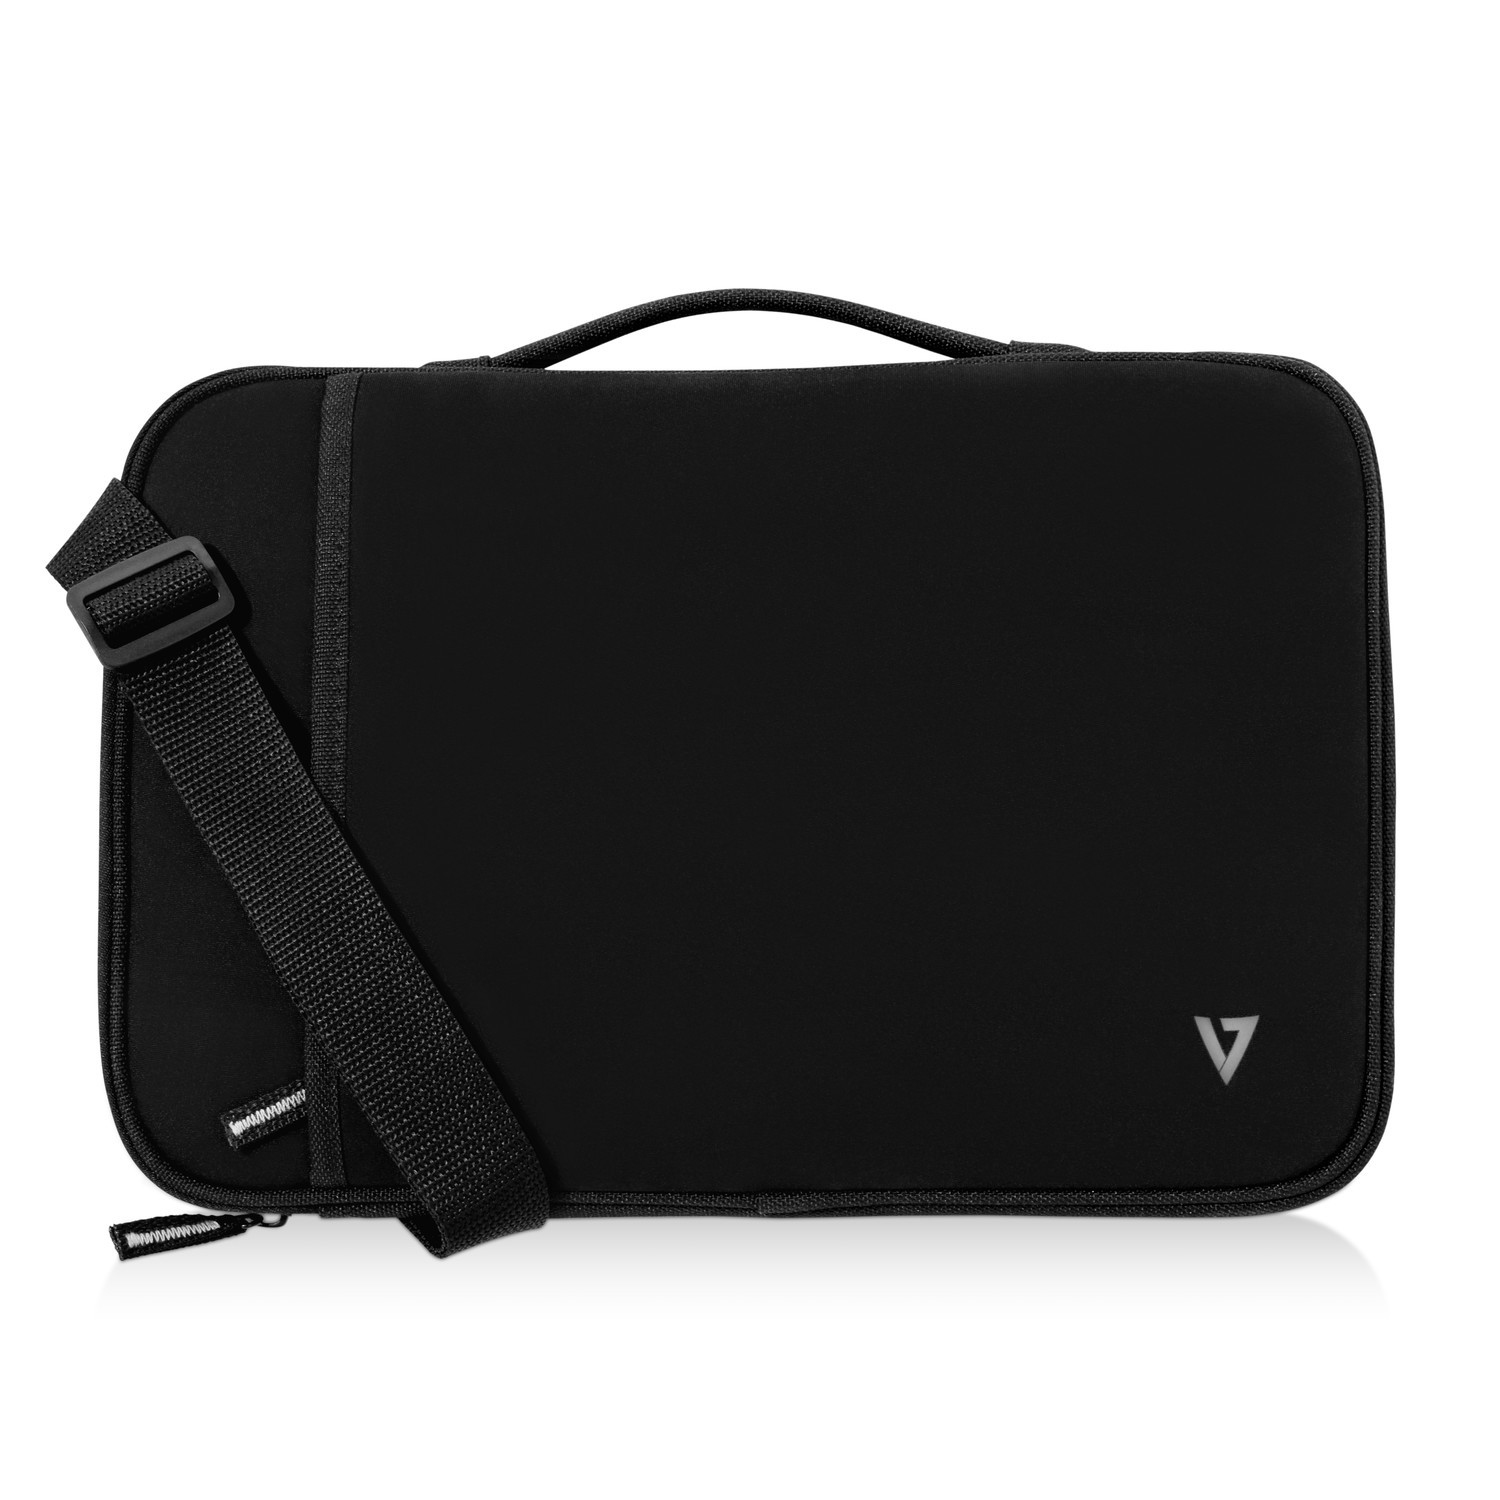 V7 - Bags                        Sleeve Elite 12.2 Inch Black        Detachable Straps And Handles       Cse12hs-blk-9e